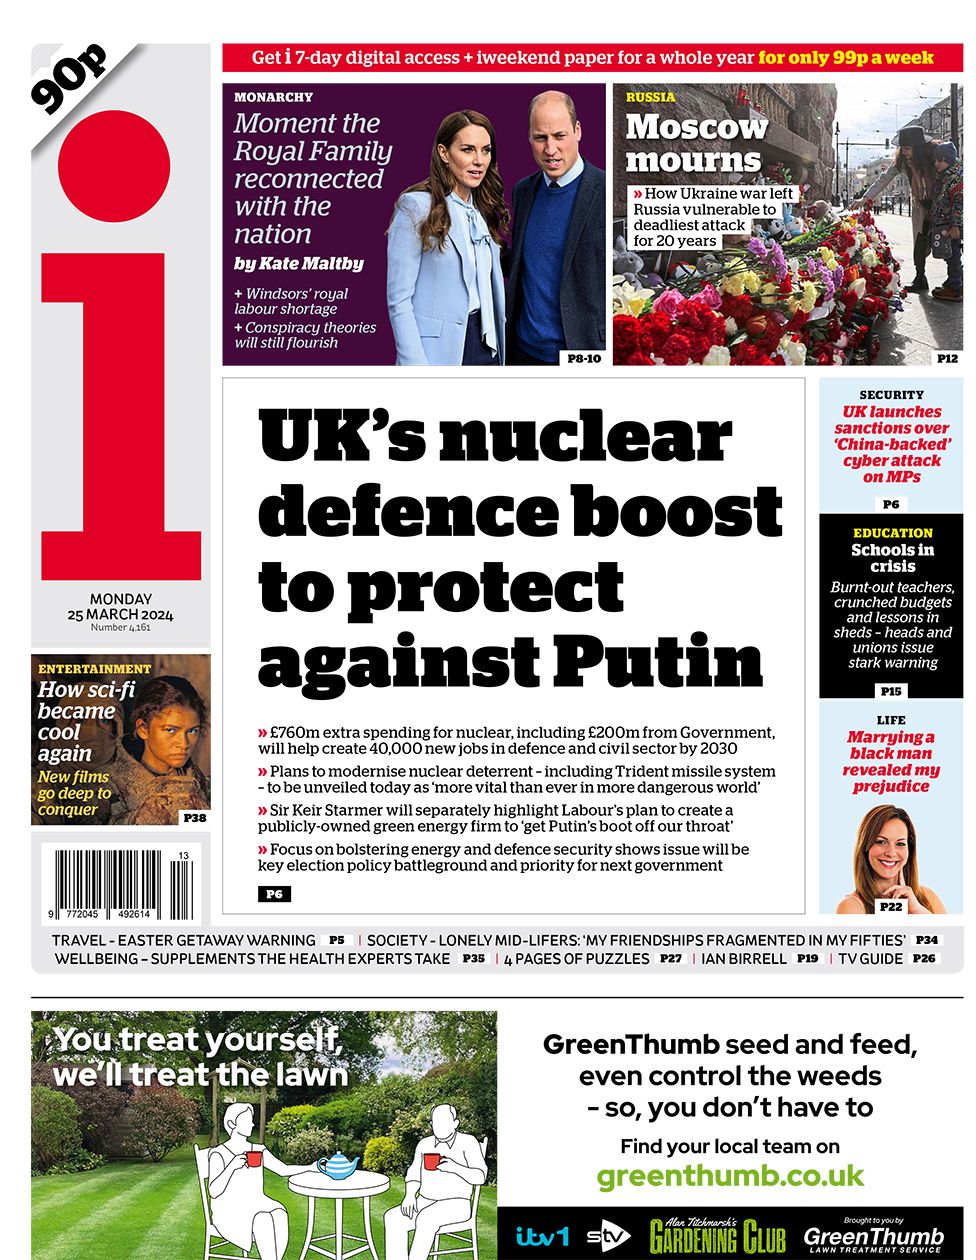 i报纸头版的标题是： "英国加强核防御以抵御普京"